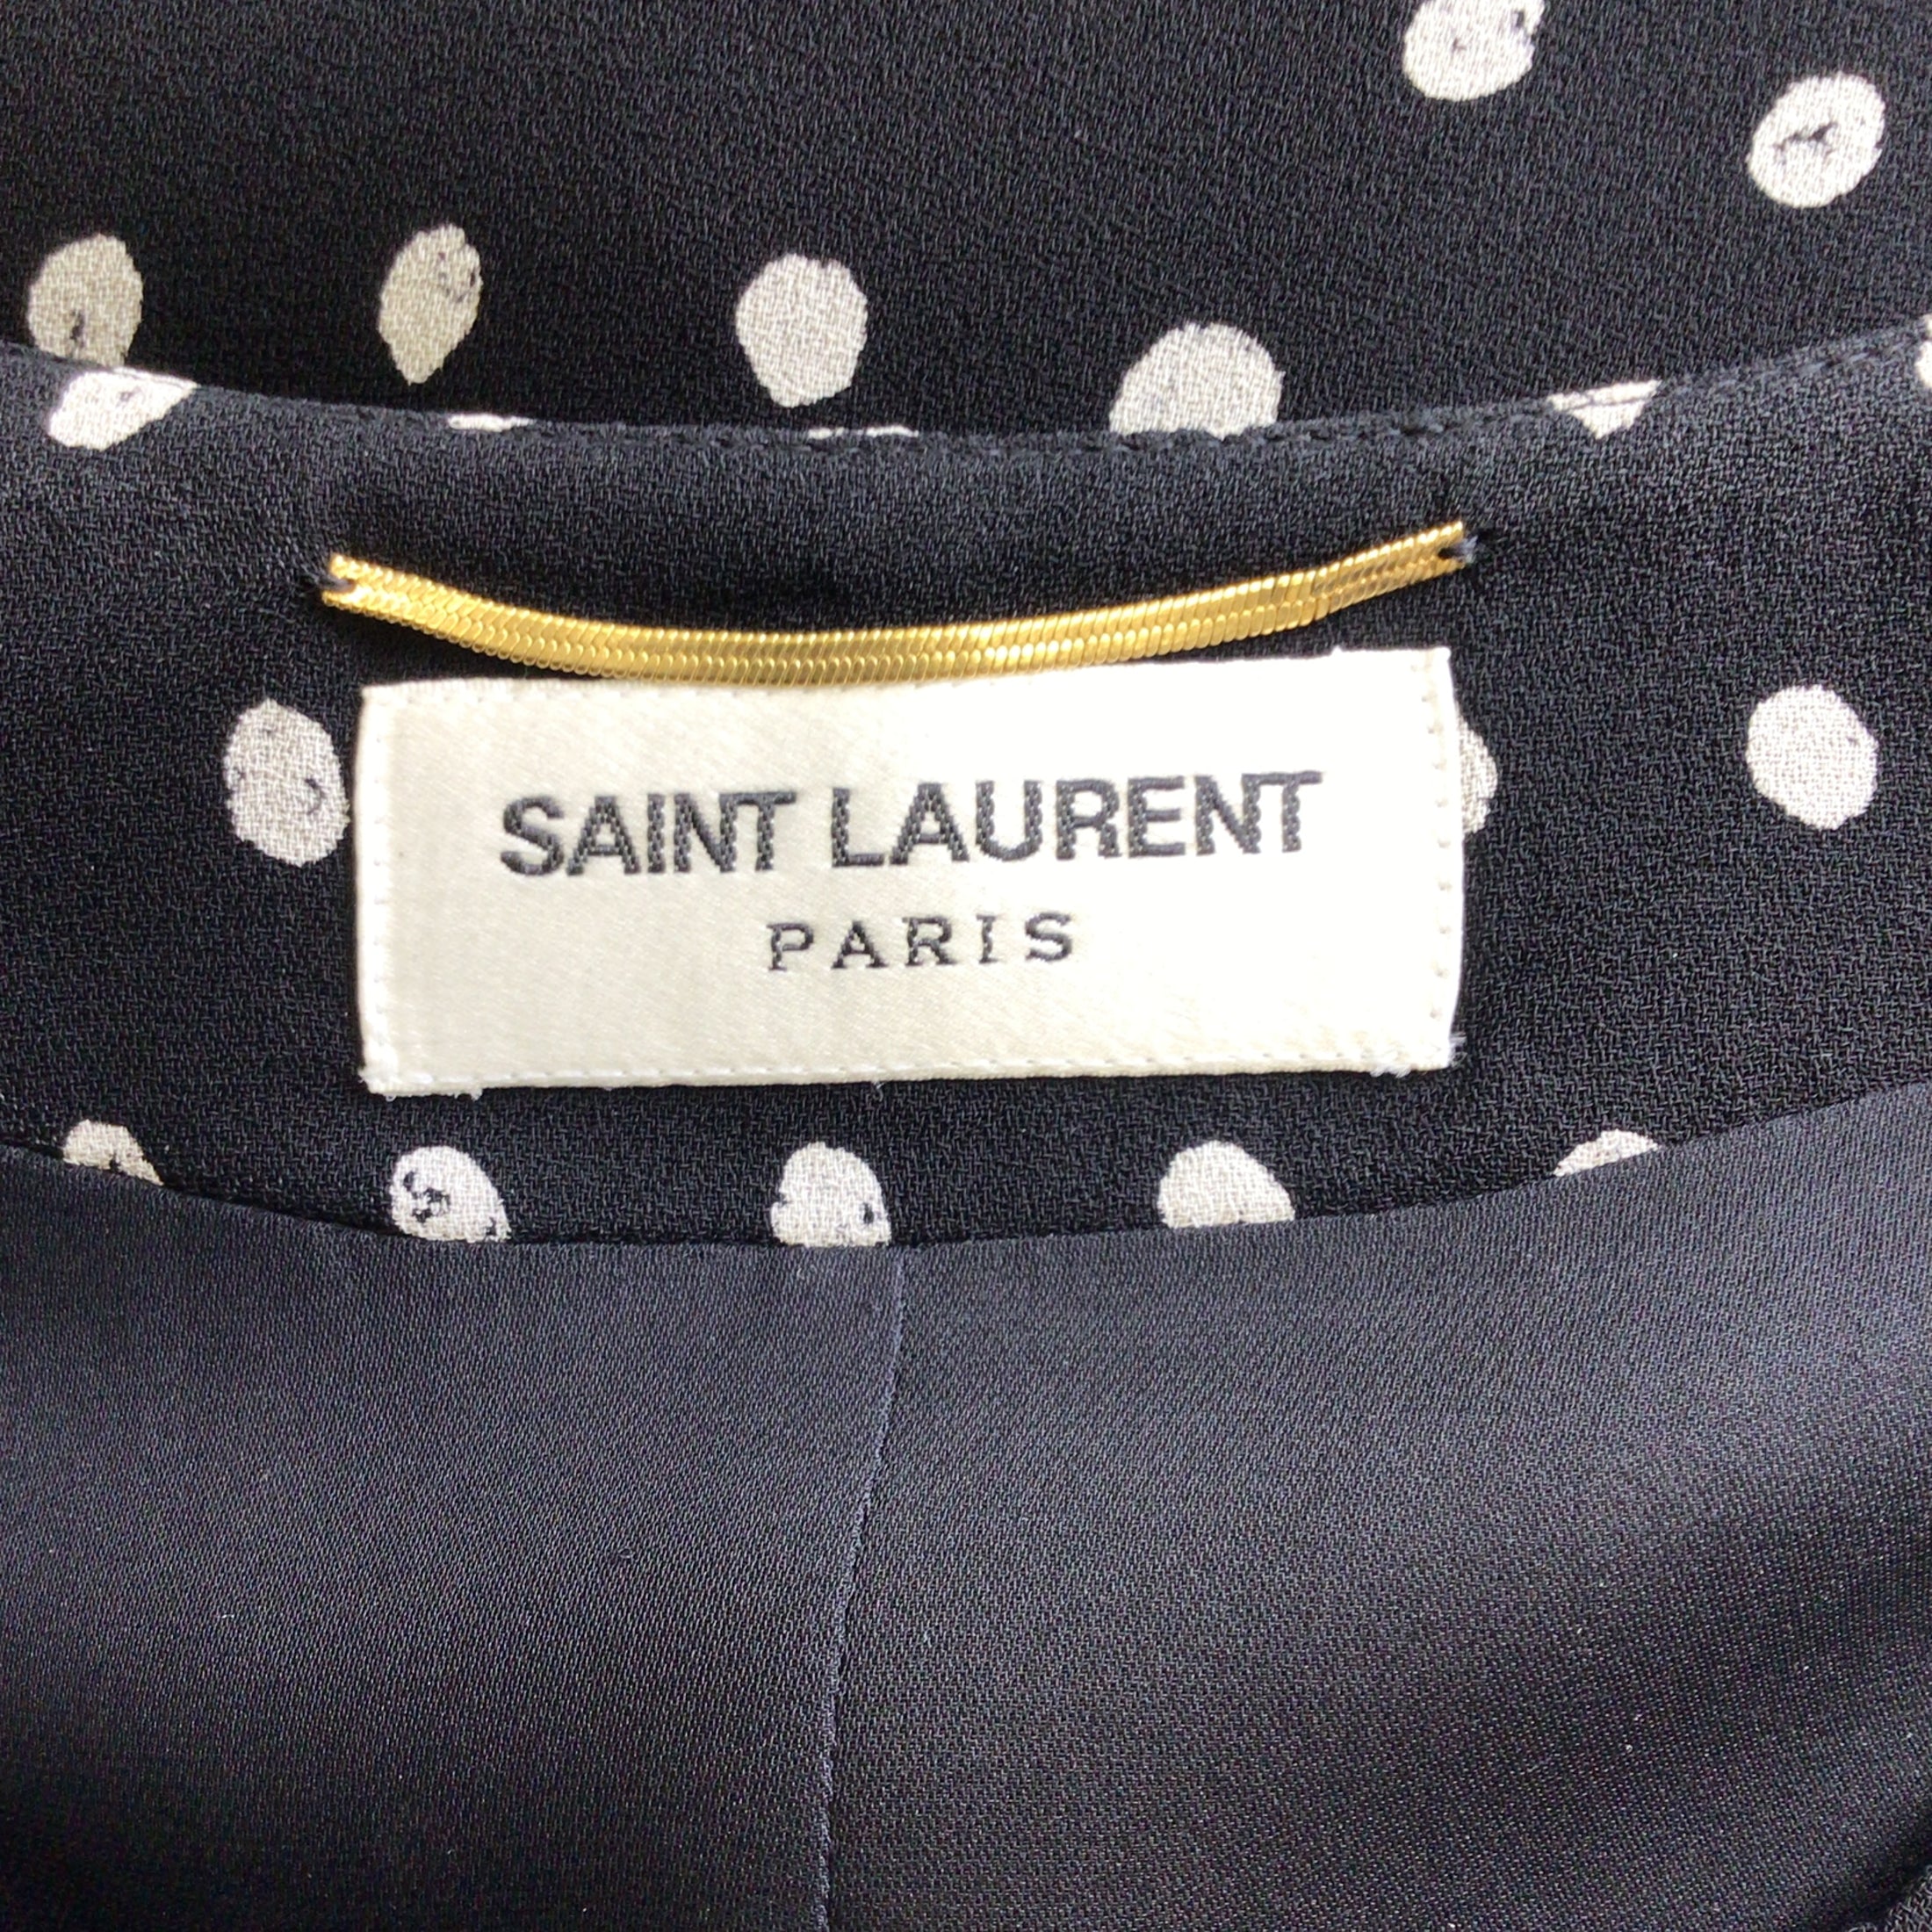 Saint Laurent Black / White 2017 Dot Print Crepe Dress